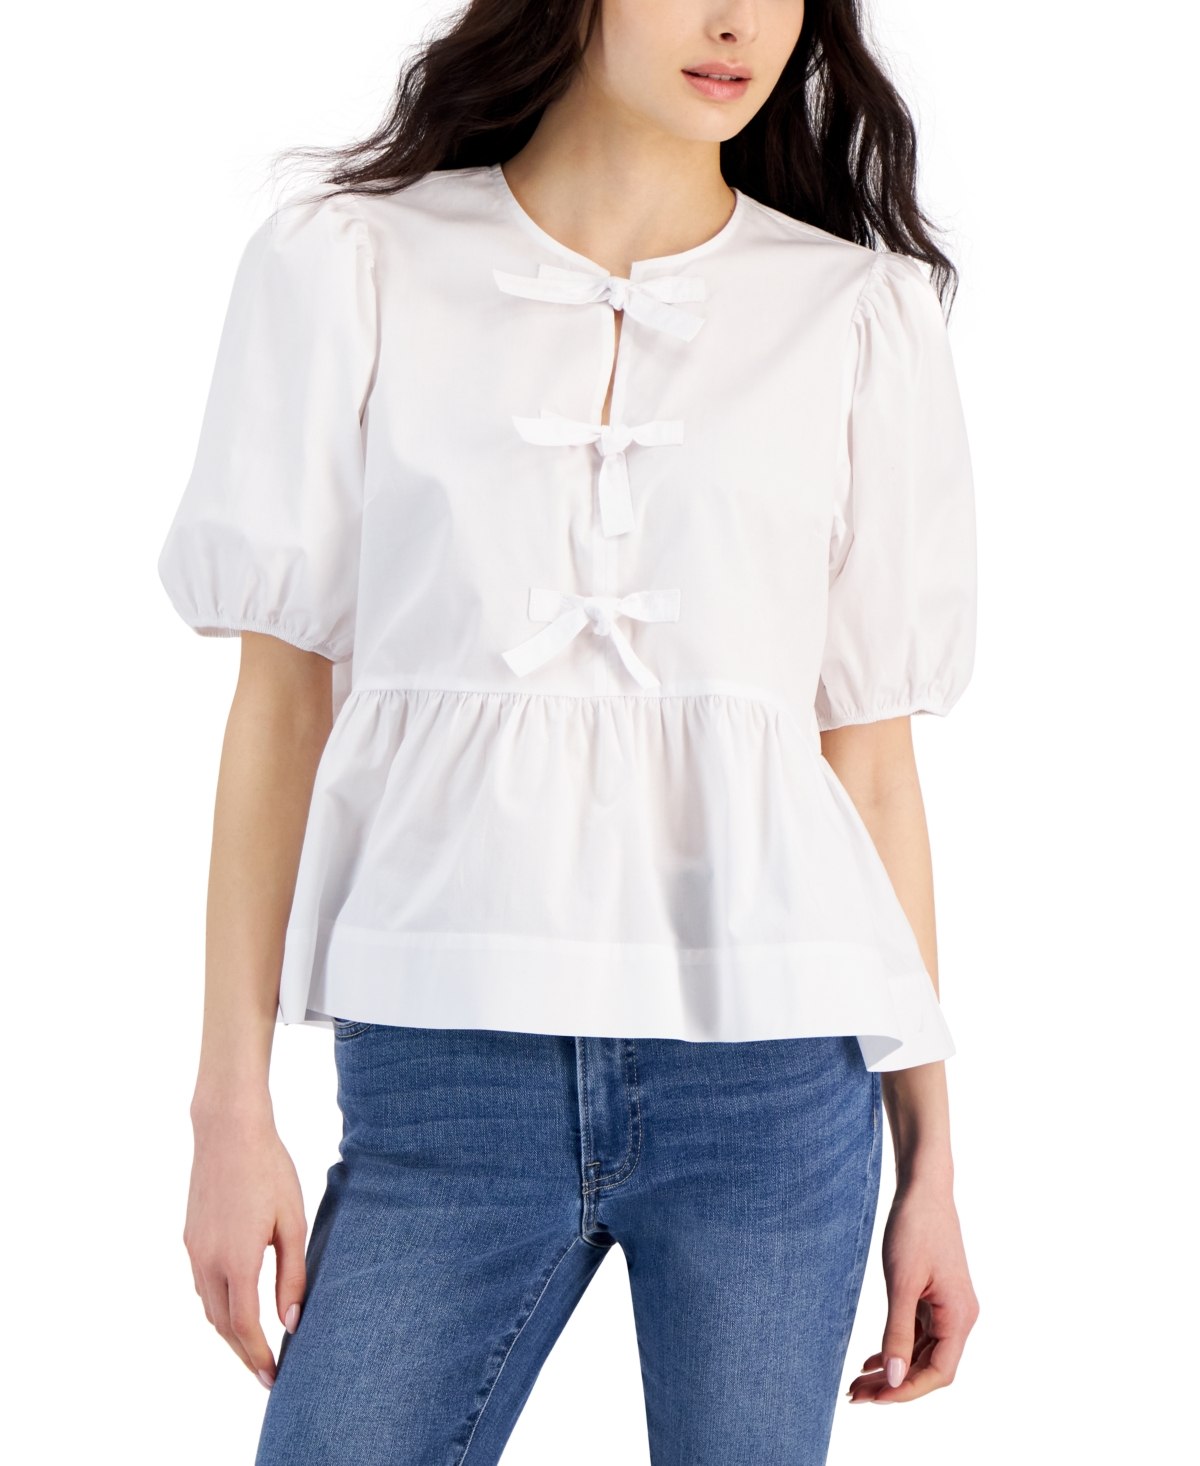 Women's Cotton Bow-Front Peplum Top - Bright White